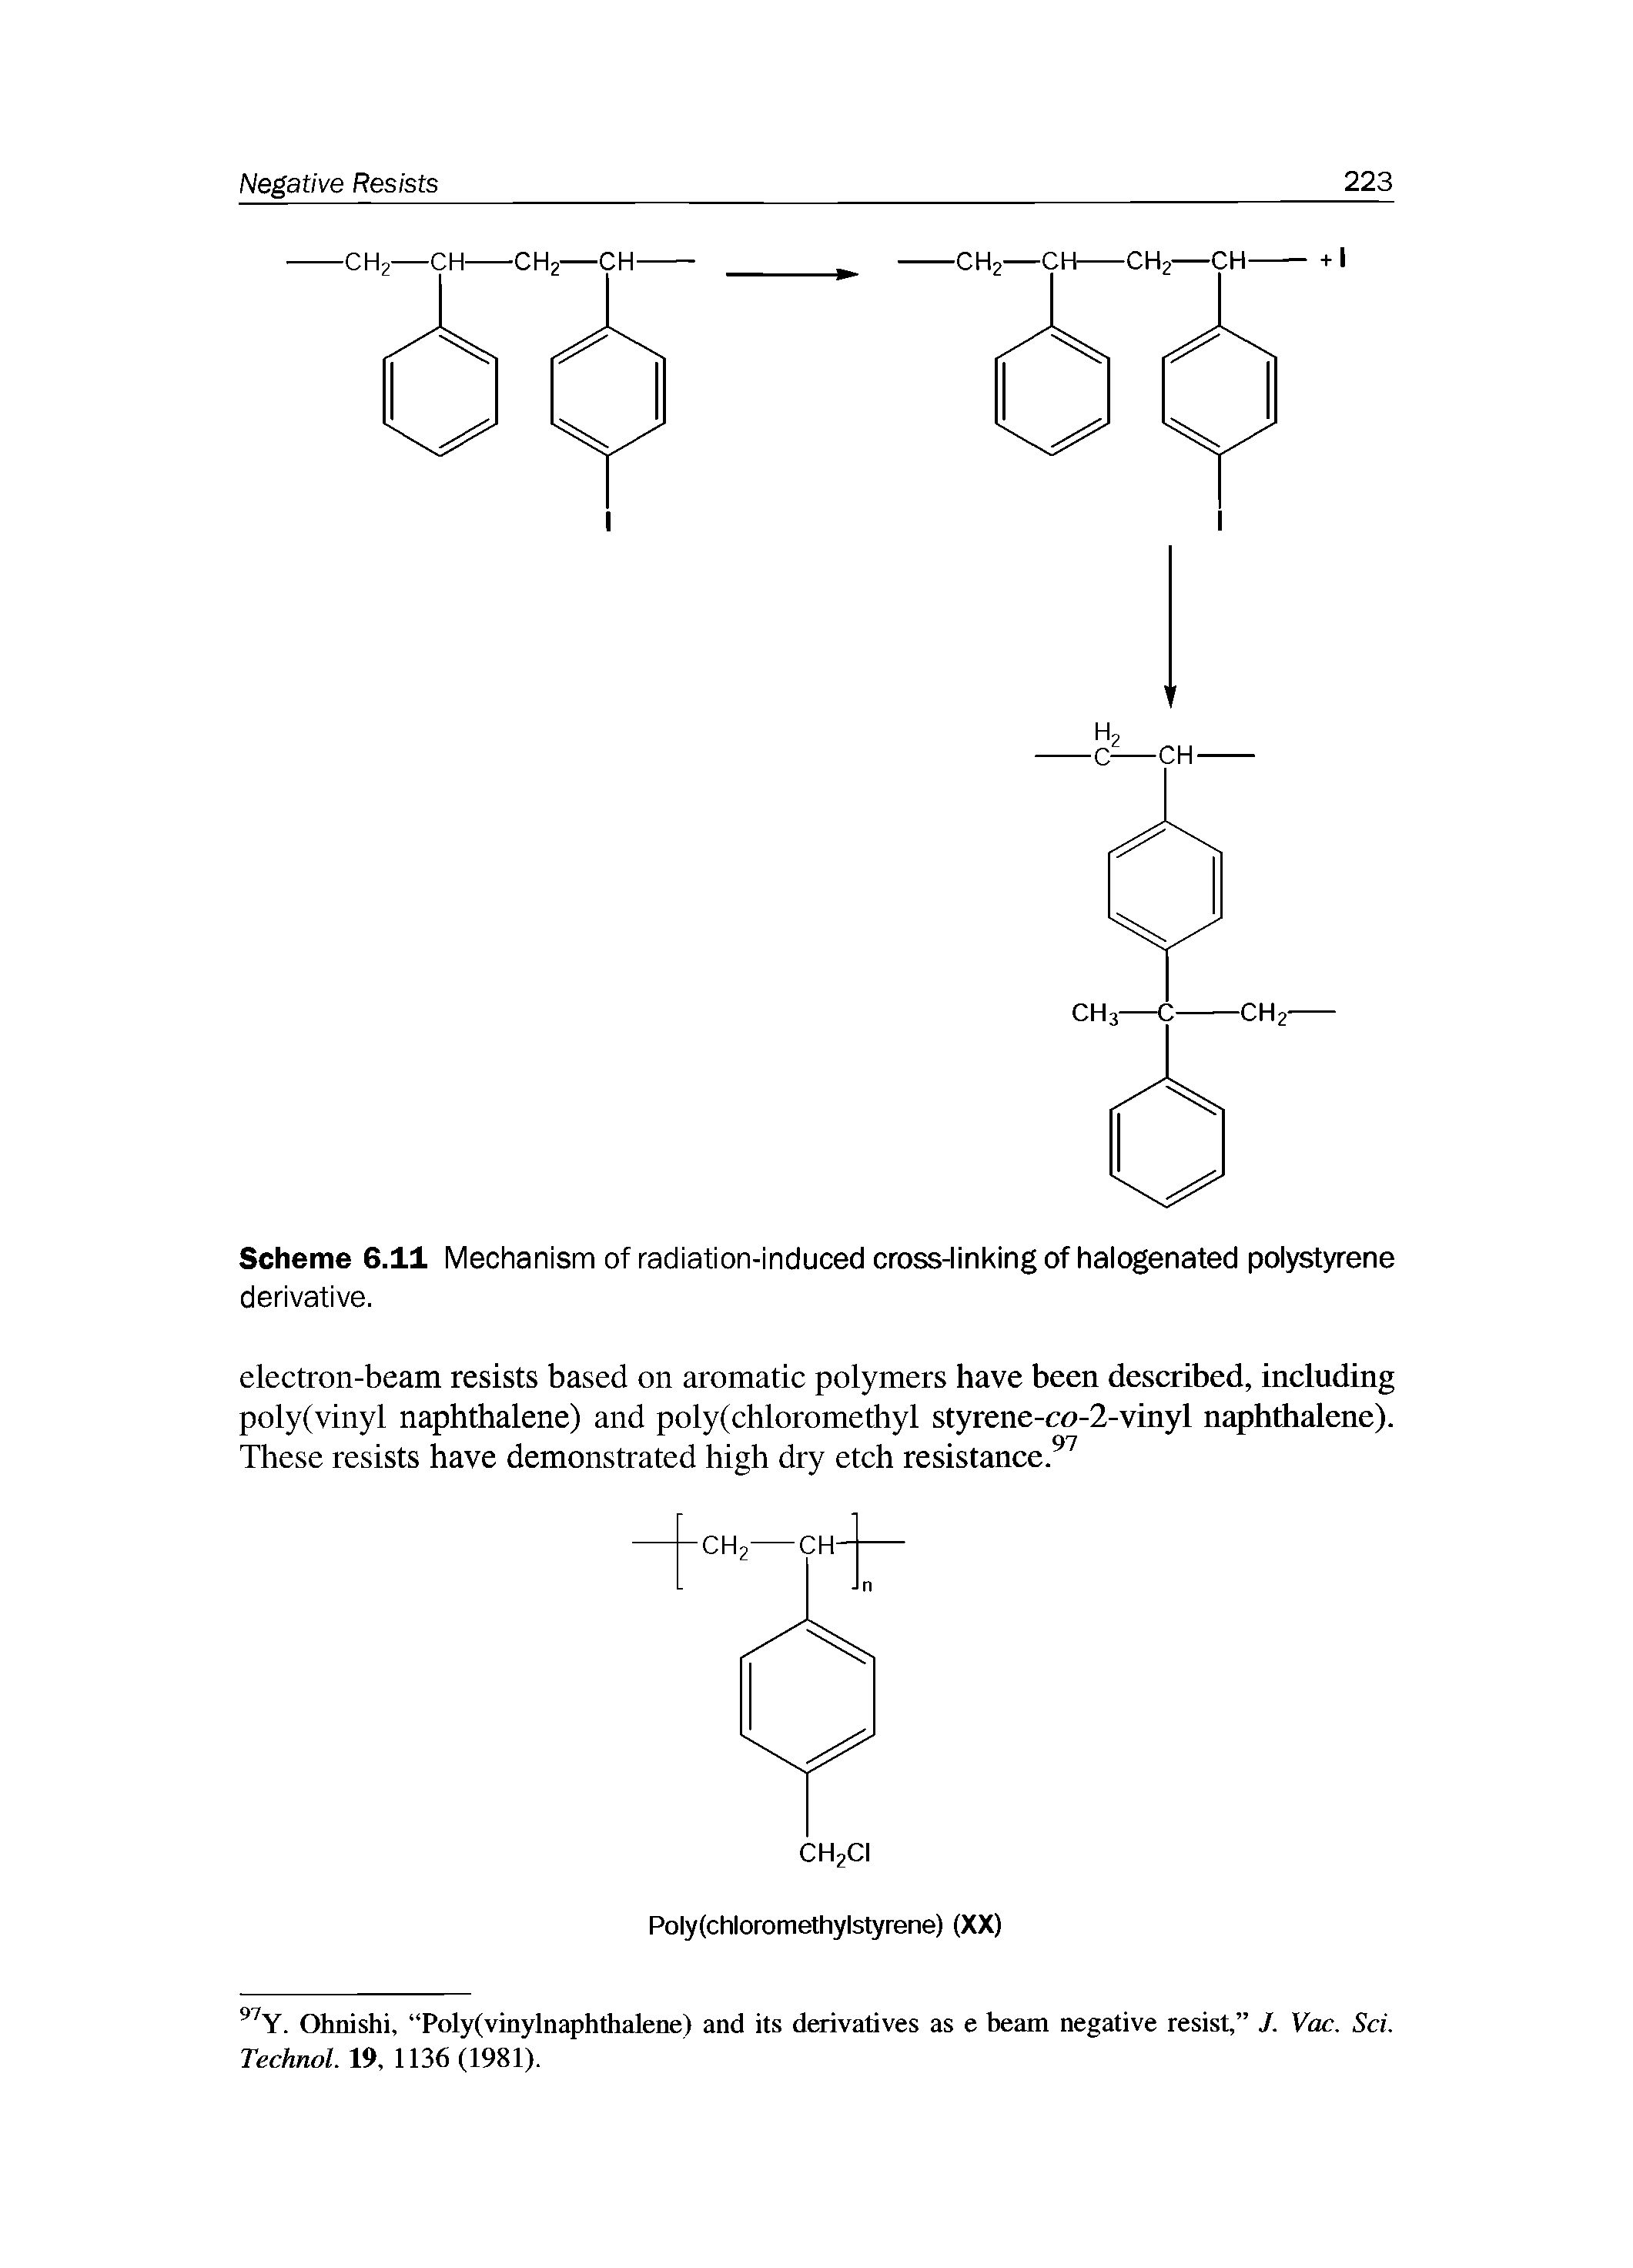 Scheme 6.11 Mechanism of radiation-induced cross-linking of halogenated polystyrene derivative.